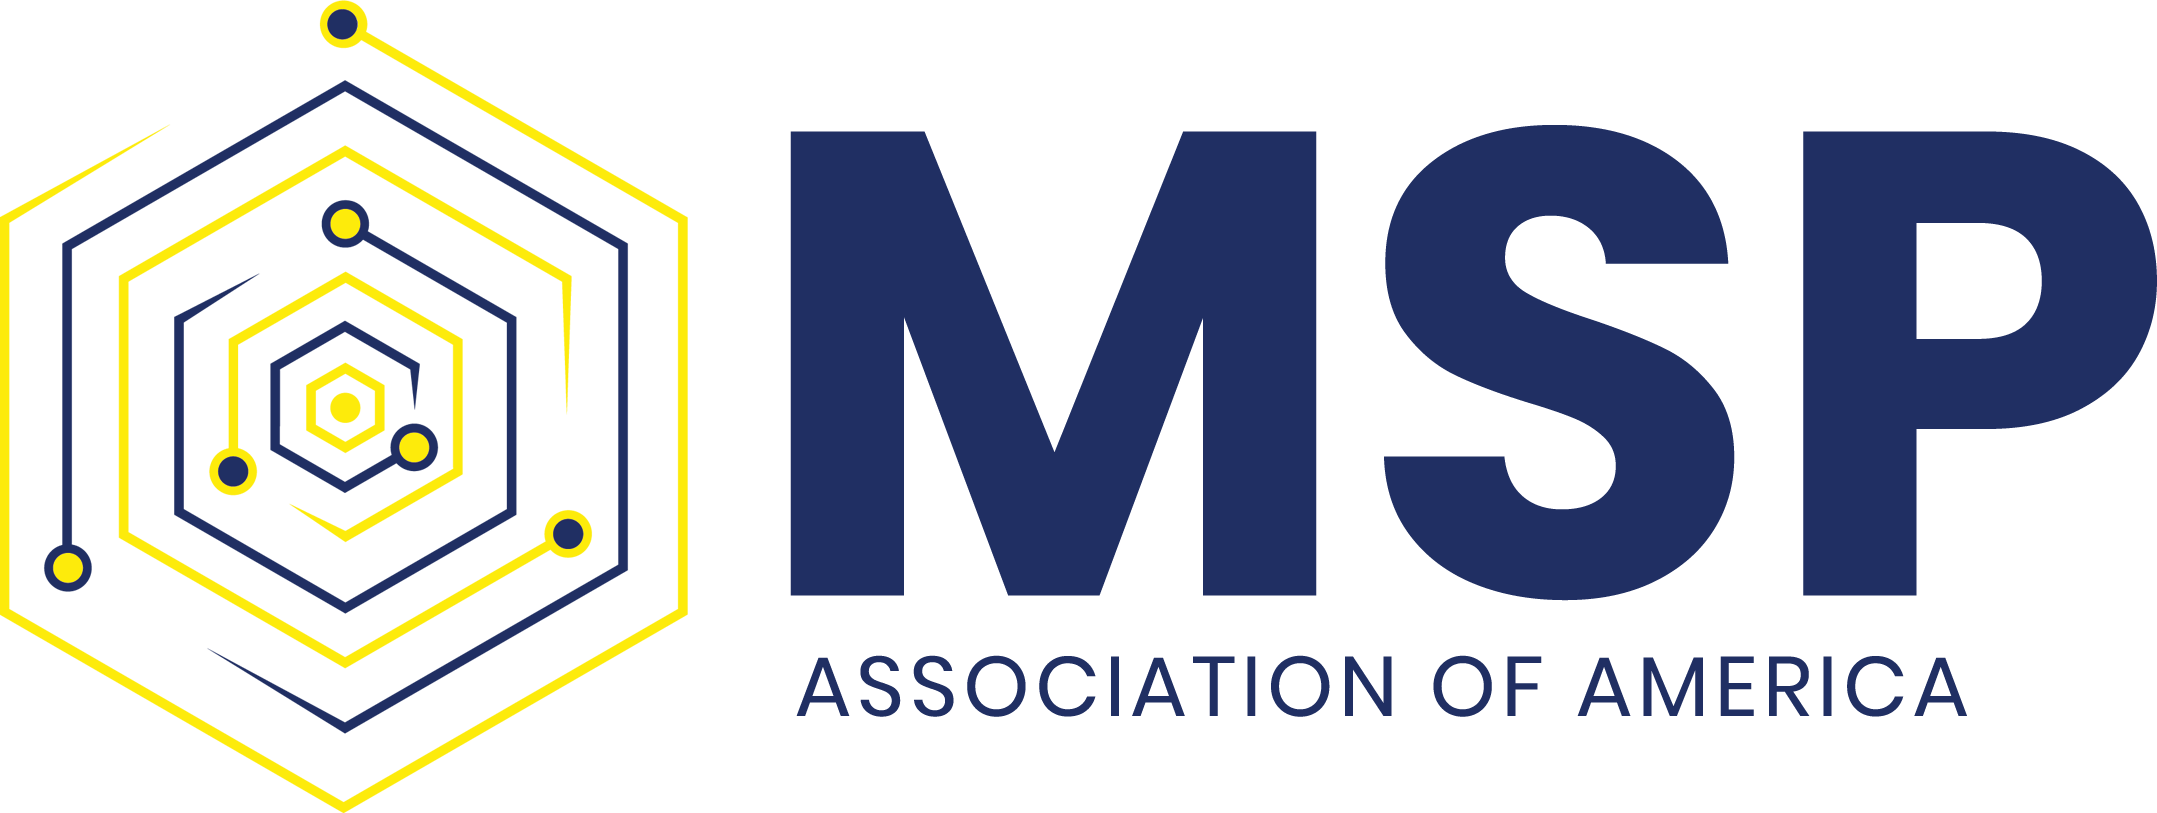 Need Tech Help | MSP Association of America 👍